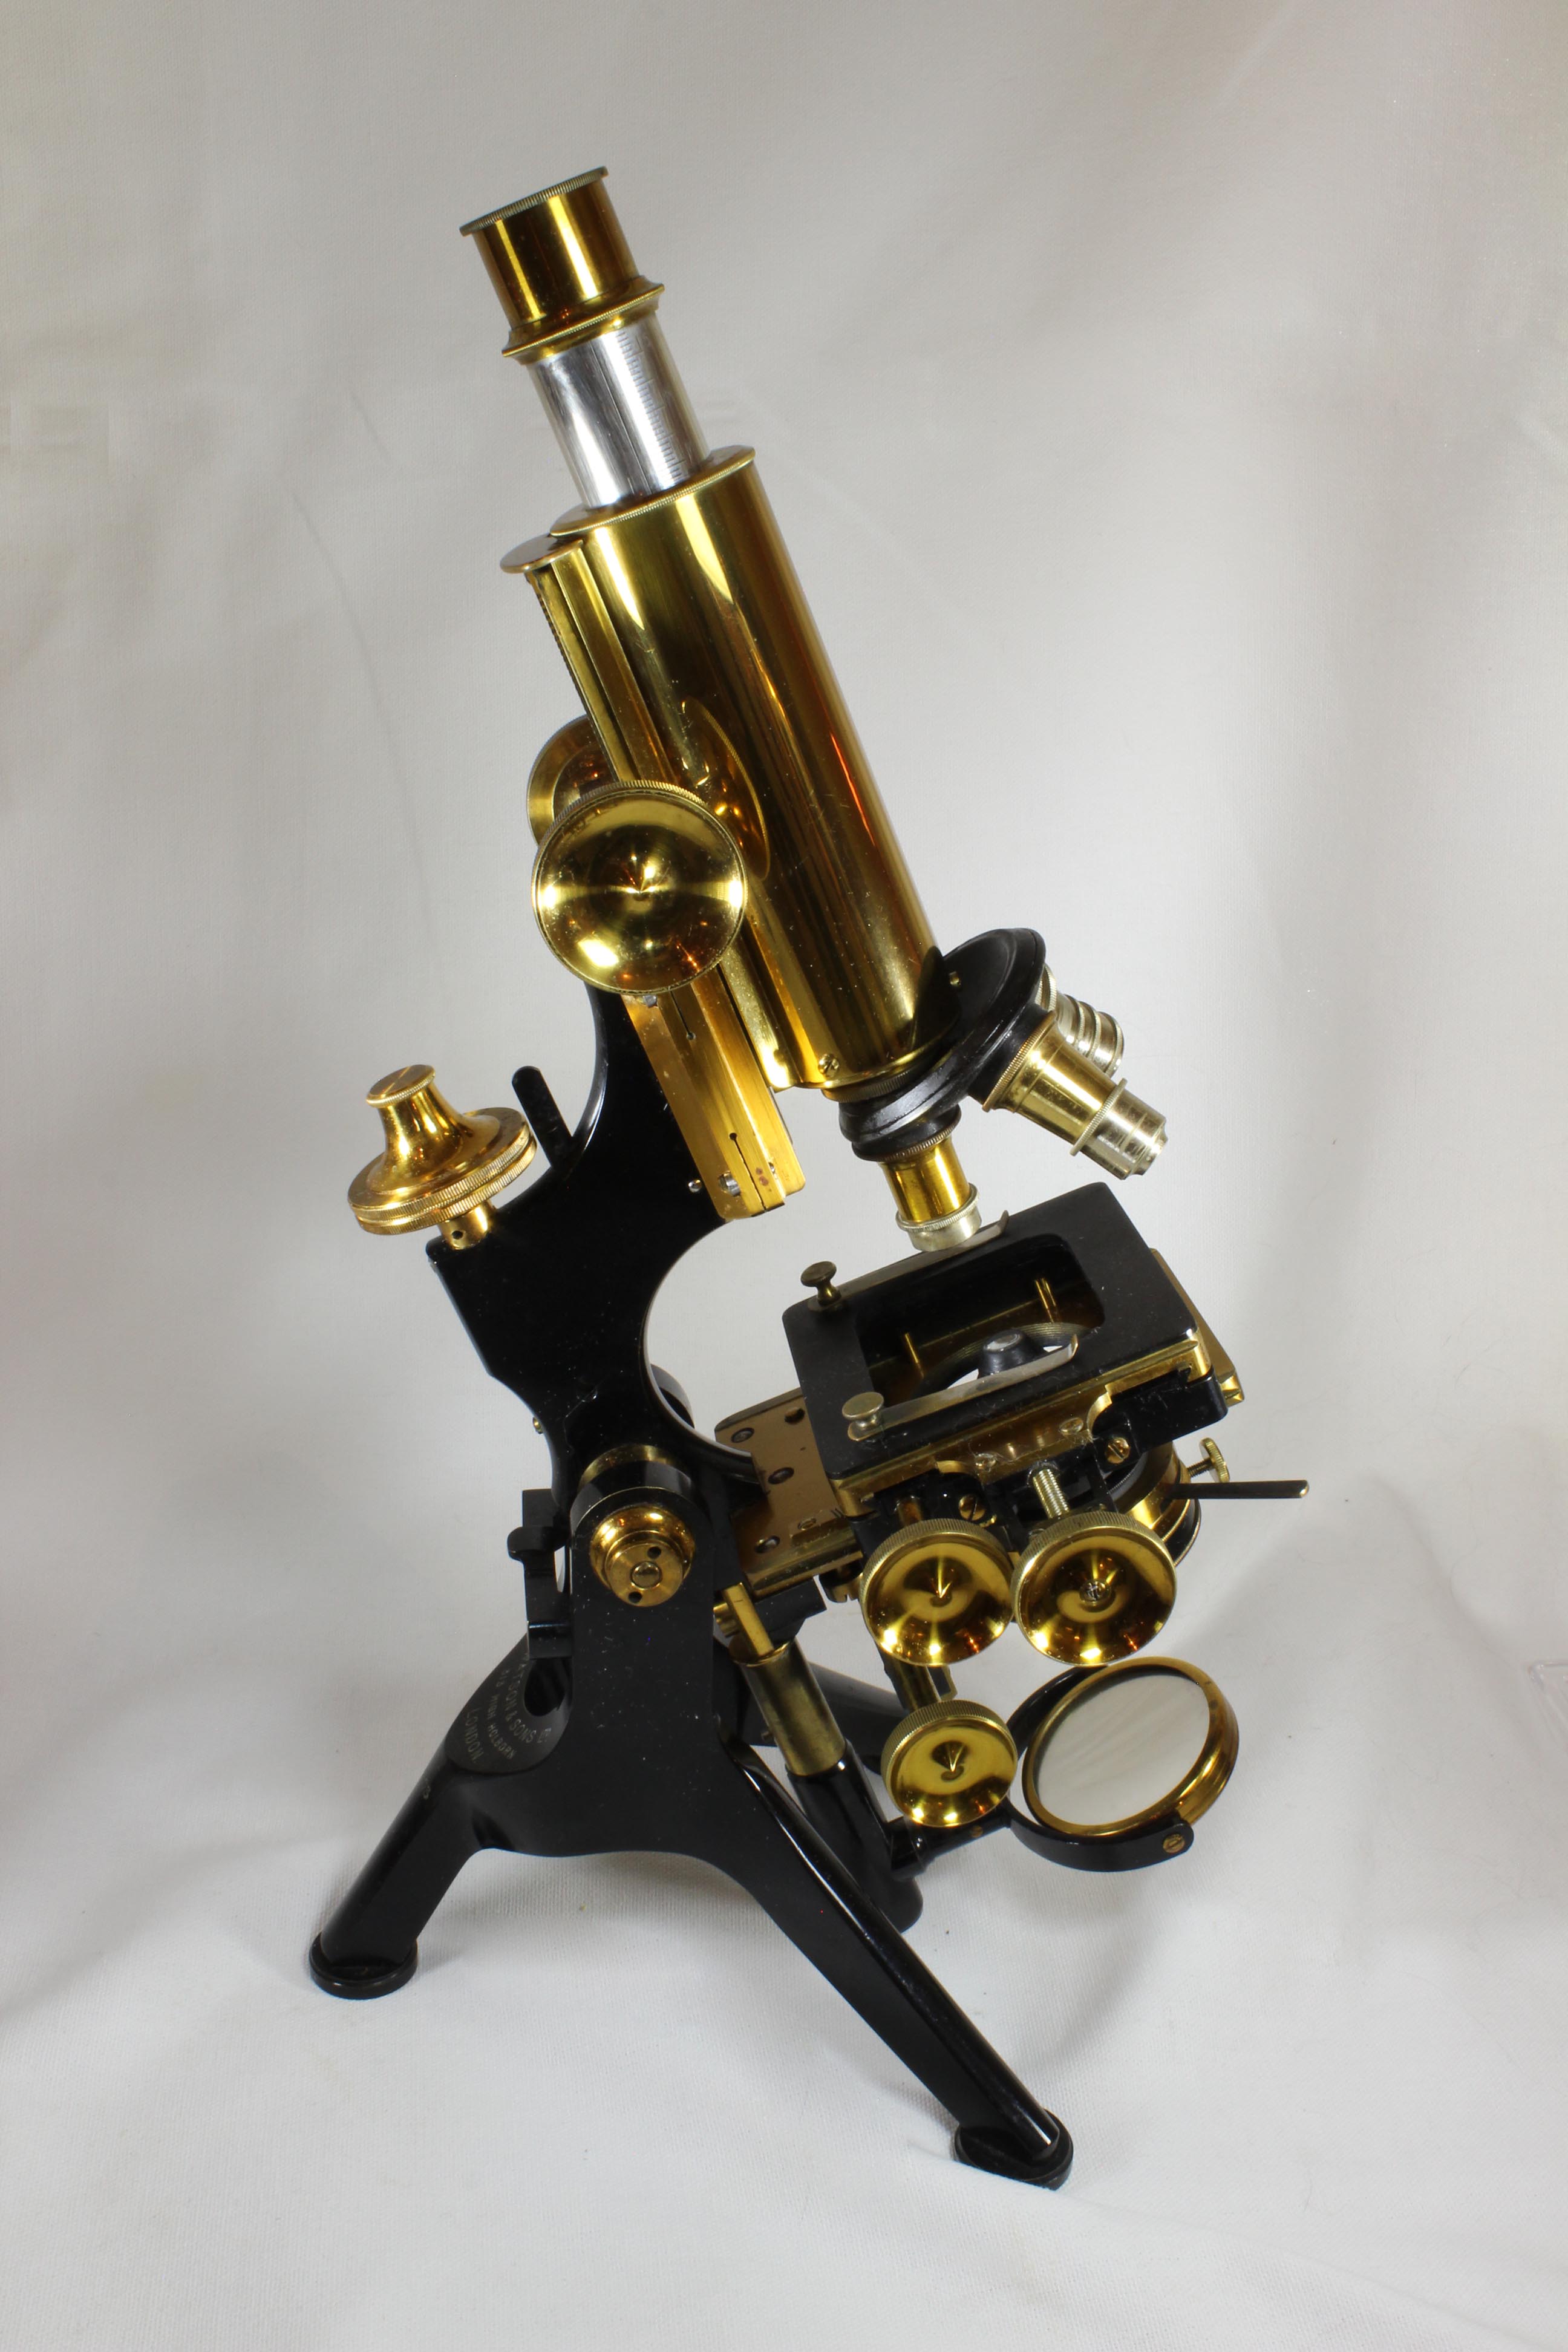 Edinburgh Model H microscope